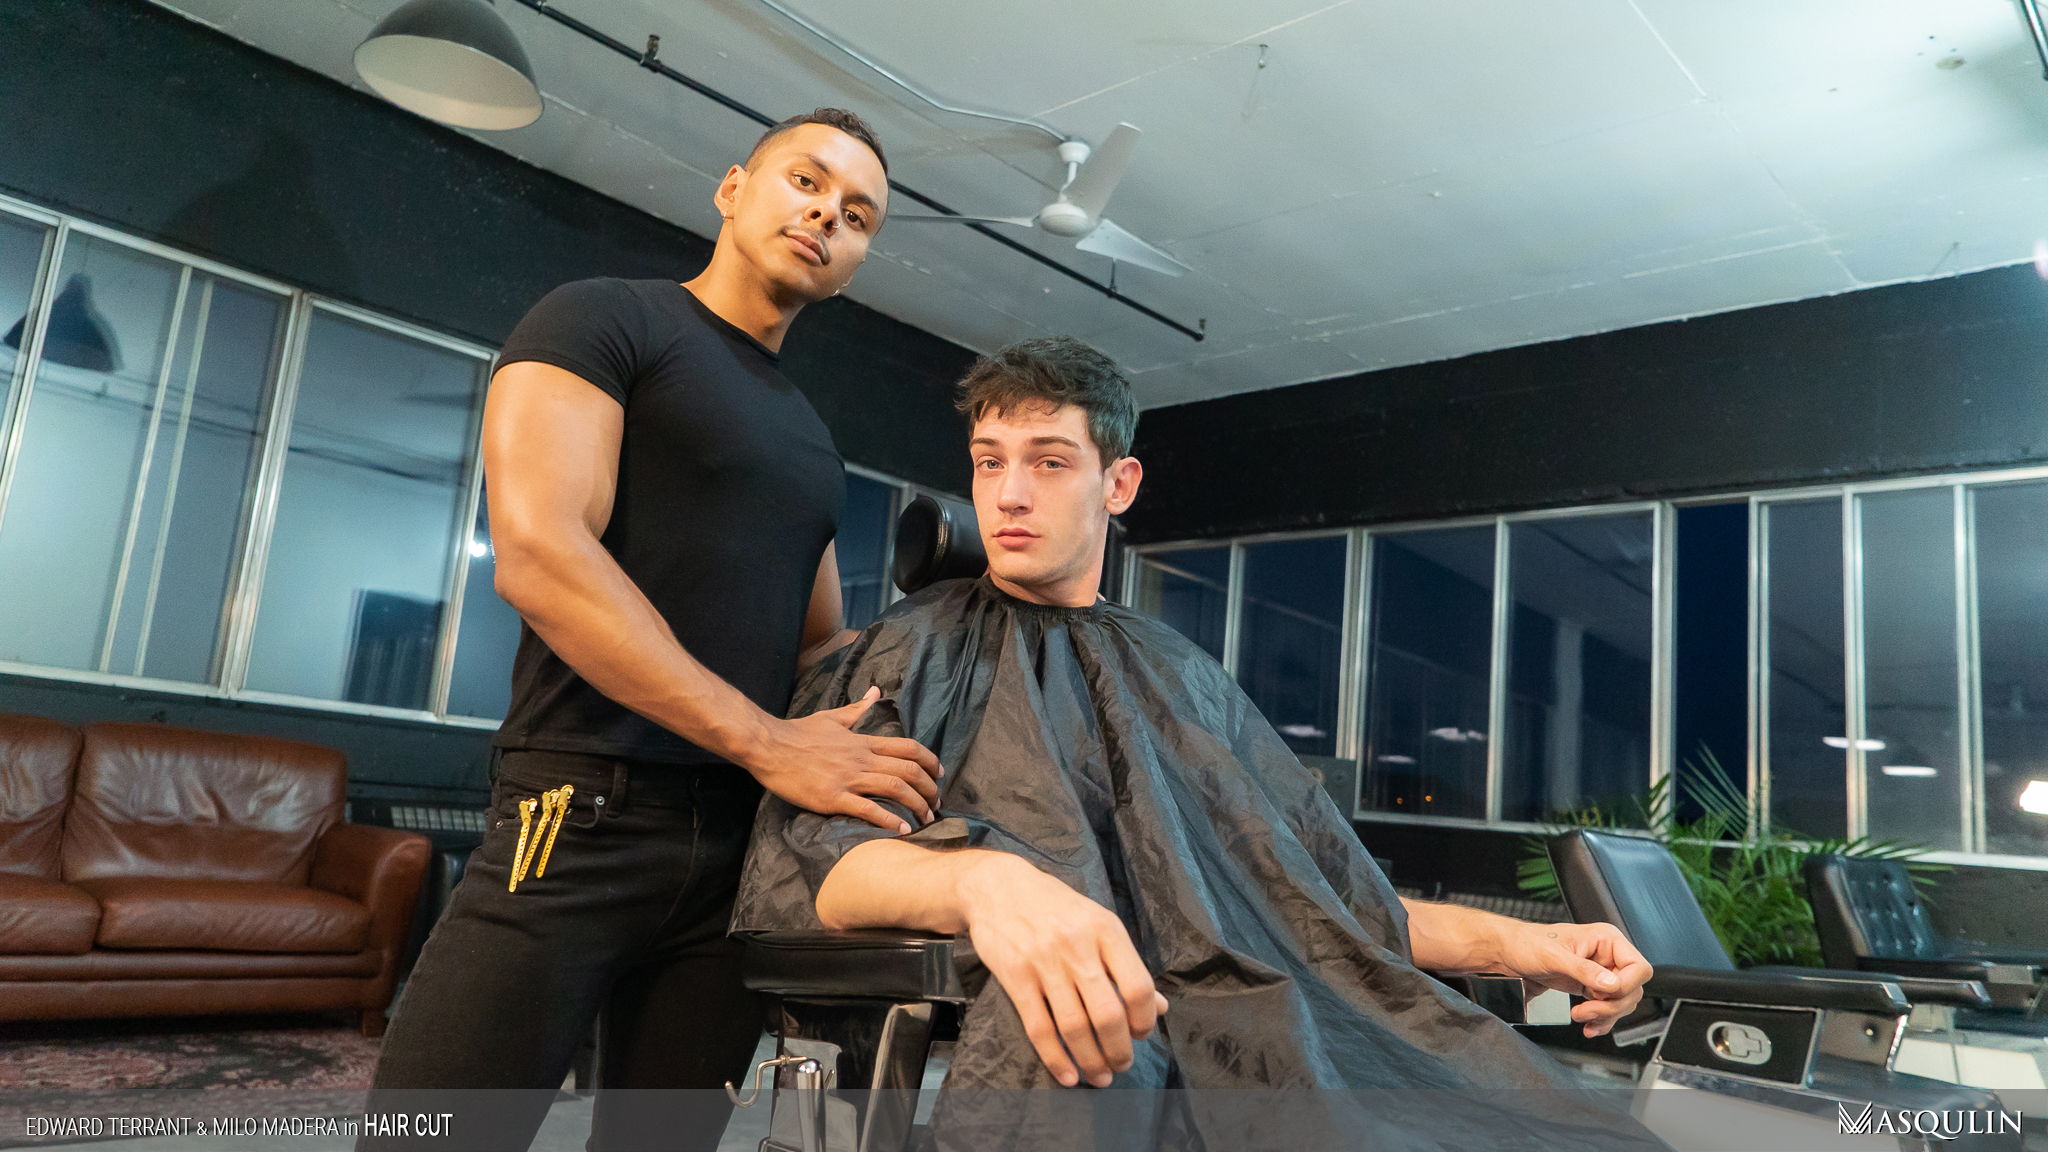 Guy feeling barber's dick while getting a haircut